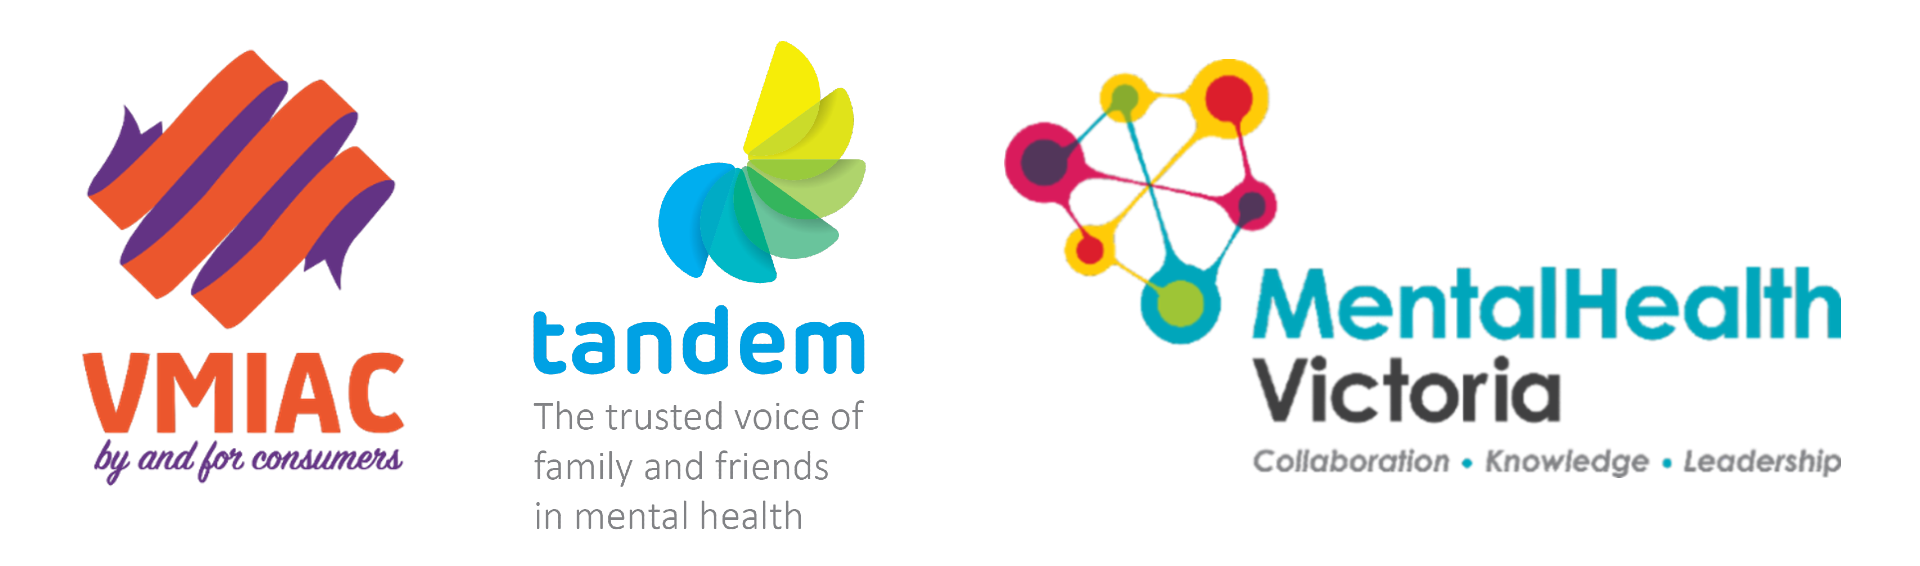 VMIAC, Tandem and Mental Health Victoria logos